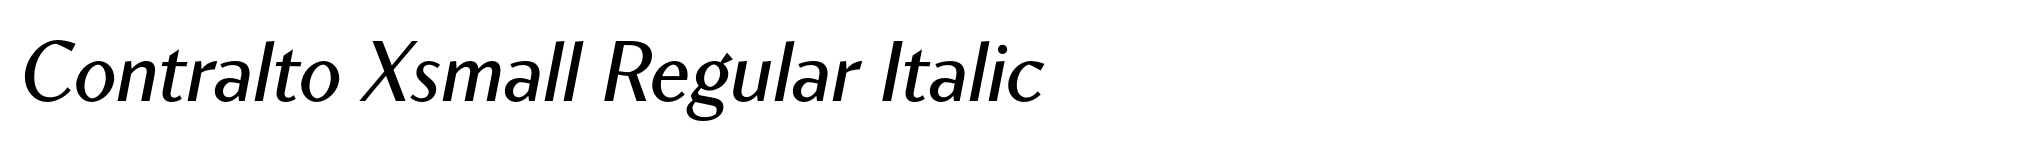 Contralto Xsmall Regular Italic image